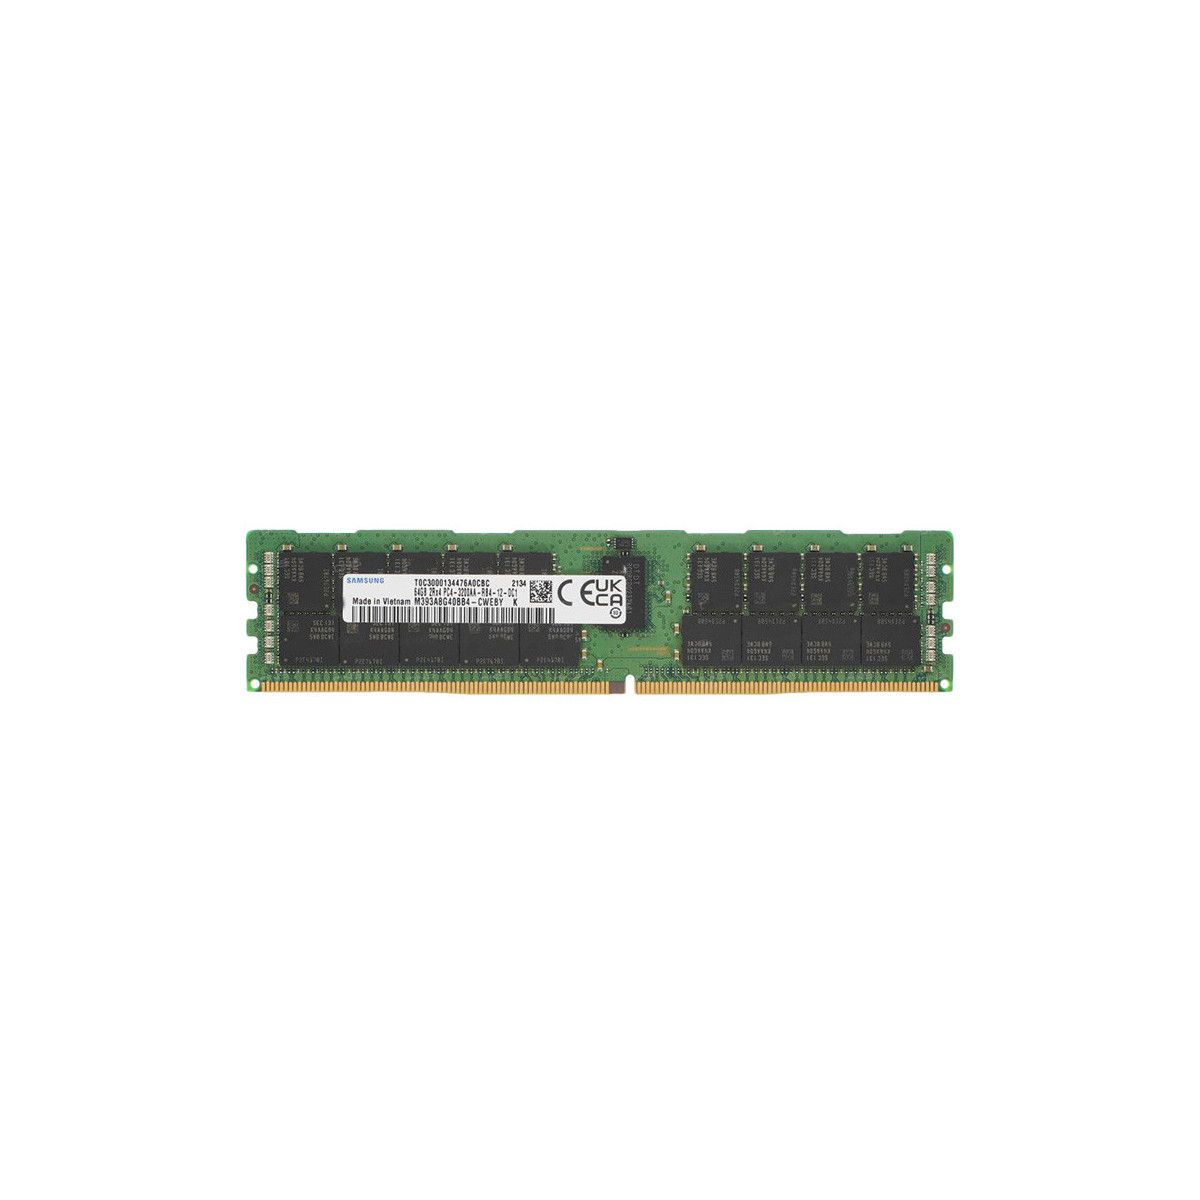 UCS-MR-X64G2RW-MS - Memstar 1x 64GB DDR4-3200 RDIMM PC4-25600R - Mem-Star Kompatibel OEM Speichermedien 1 - Memstar 